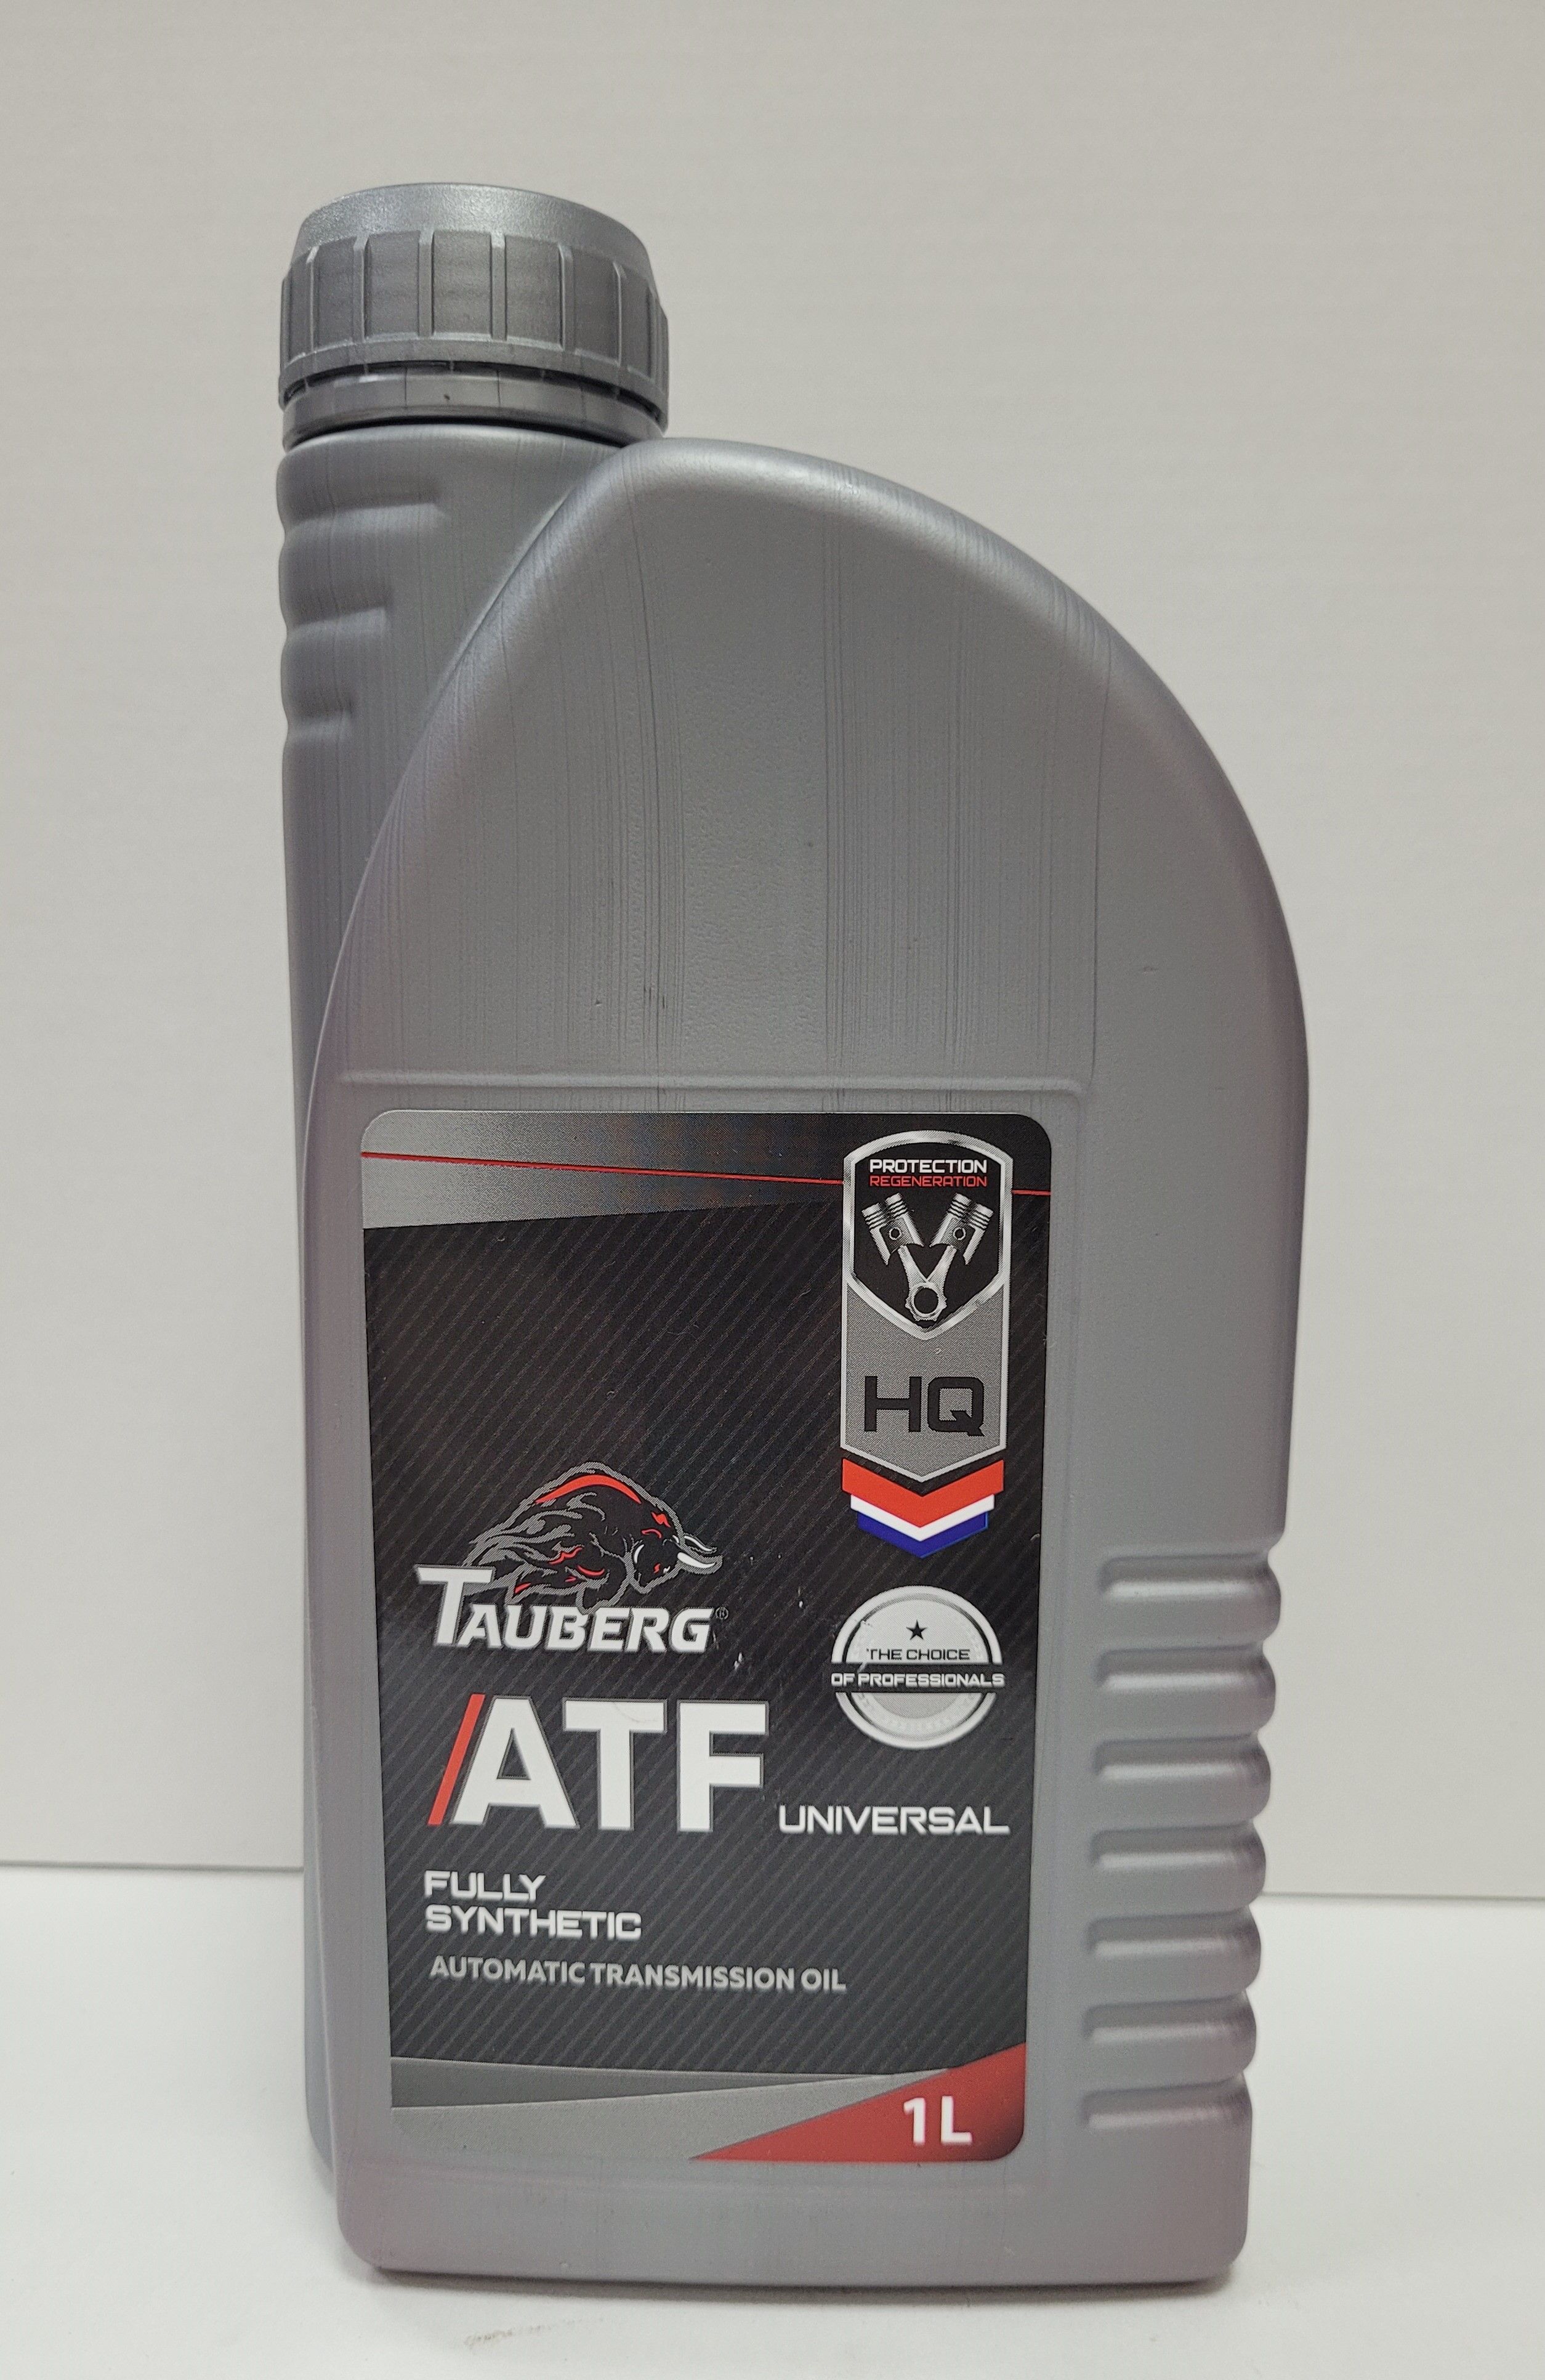 Универсальный атф. Tauberg масла. Tauberg ATF Universal fully Synthetic допуски. Такберг масло маторное масло. Korson Universal ATF.